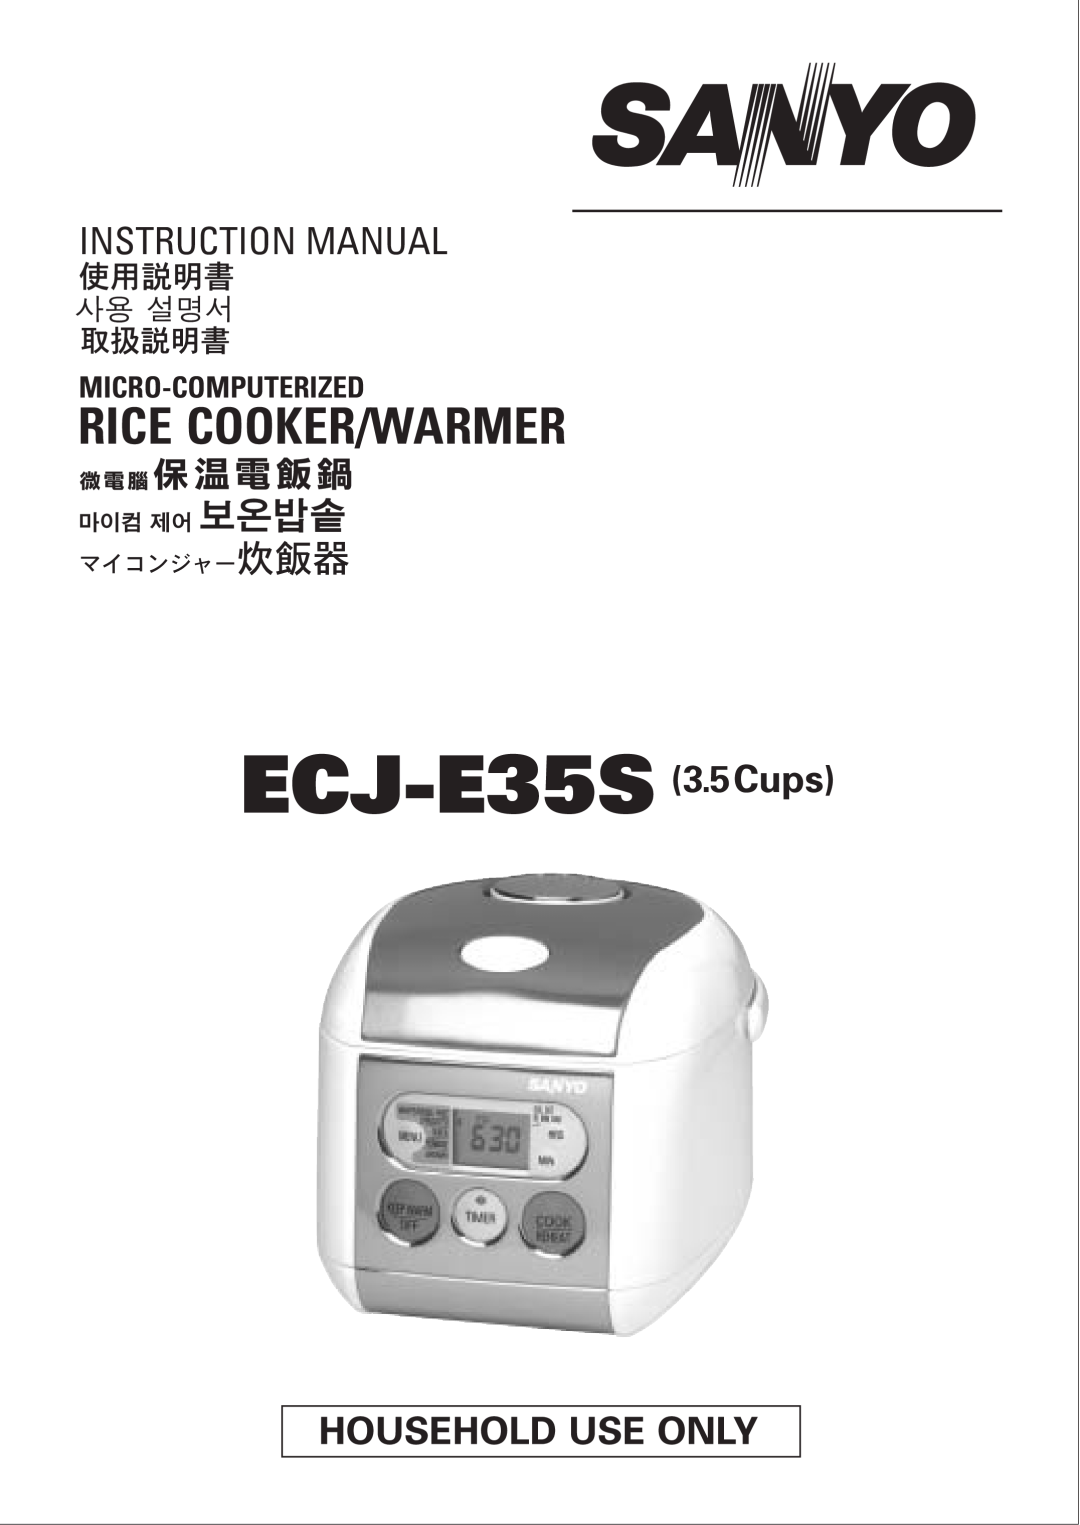 Sanyo instruction manual ECJ-E35S 3.5Cups, Rice Cooker/Warmer, マイコンジャー 炊飯器 